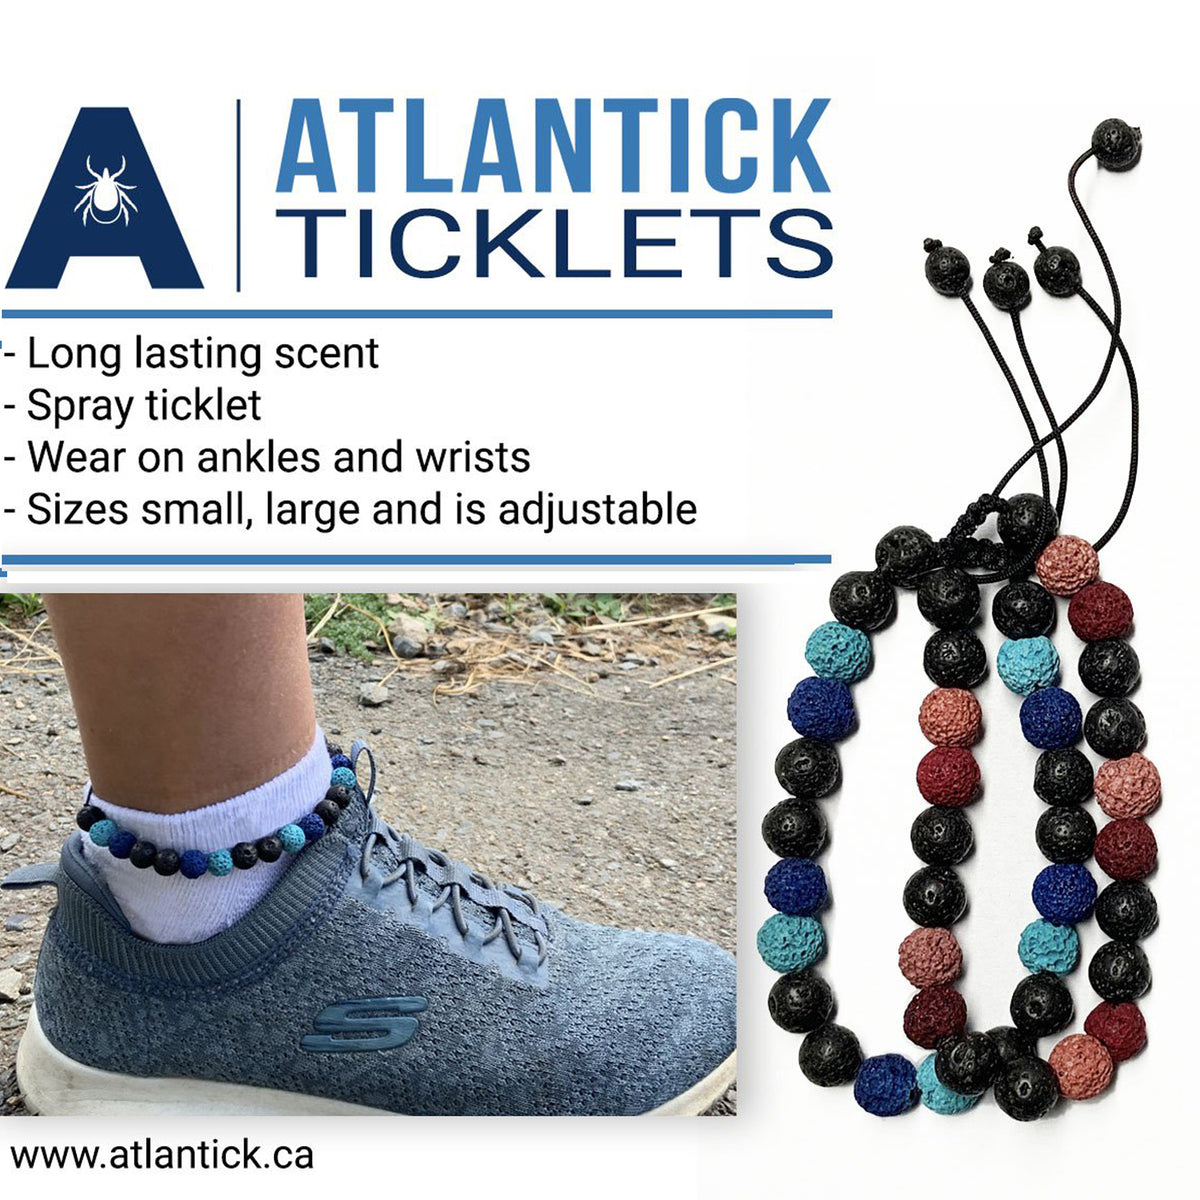 AtlanTick® Lava Bead Bracelet Ticklets - Small